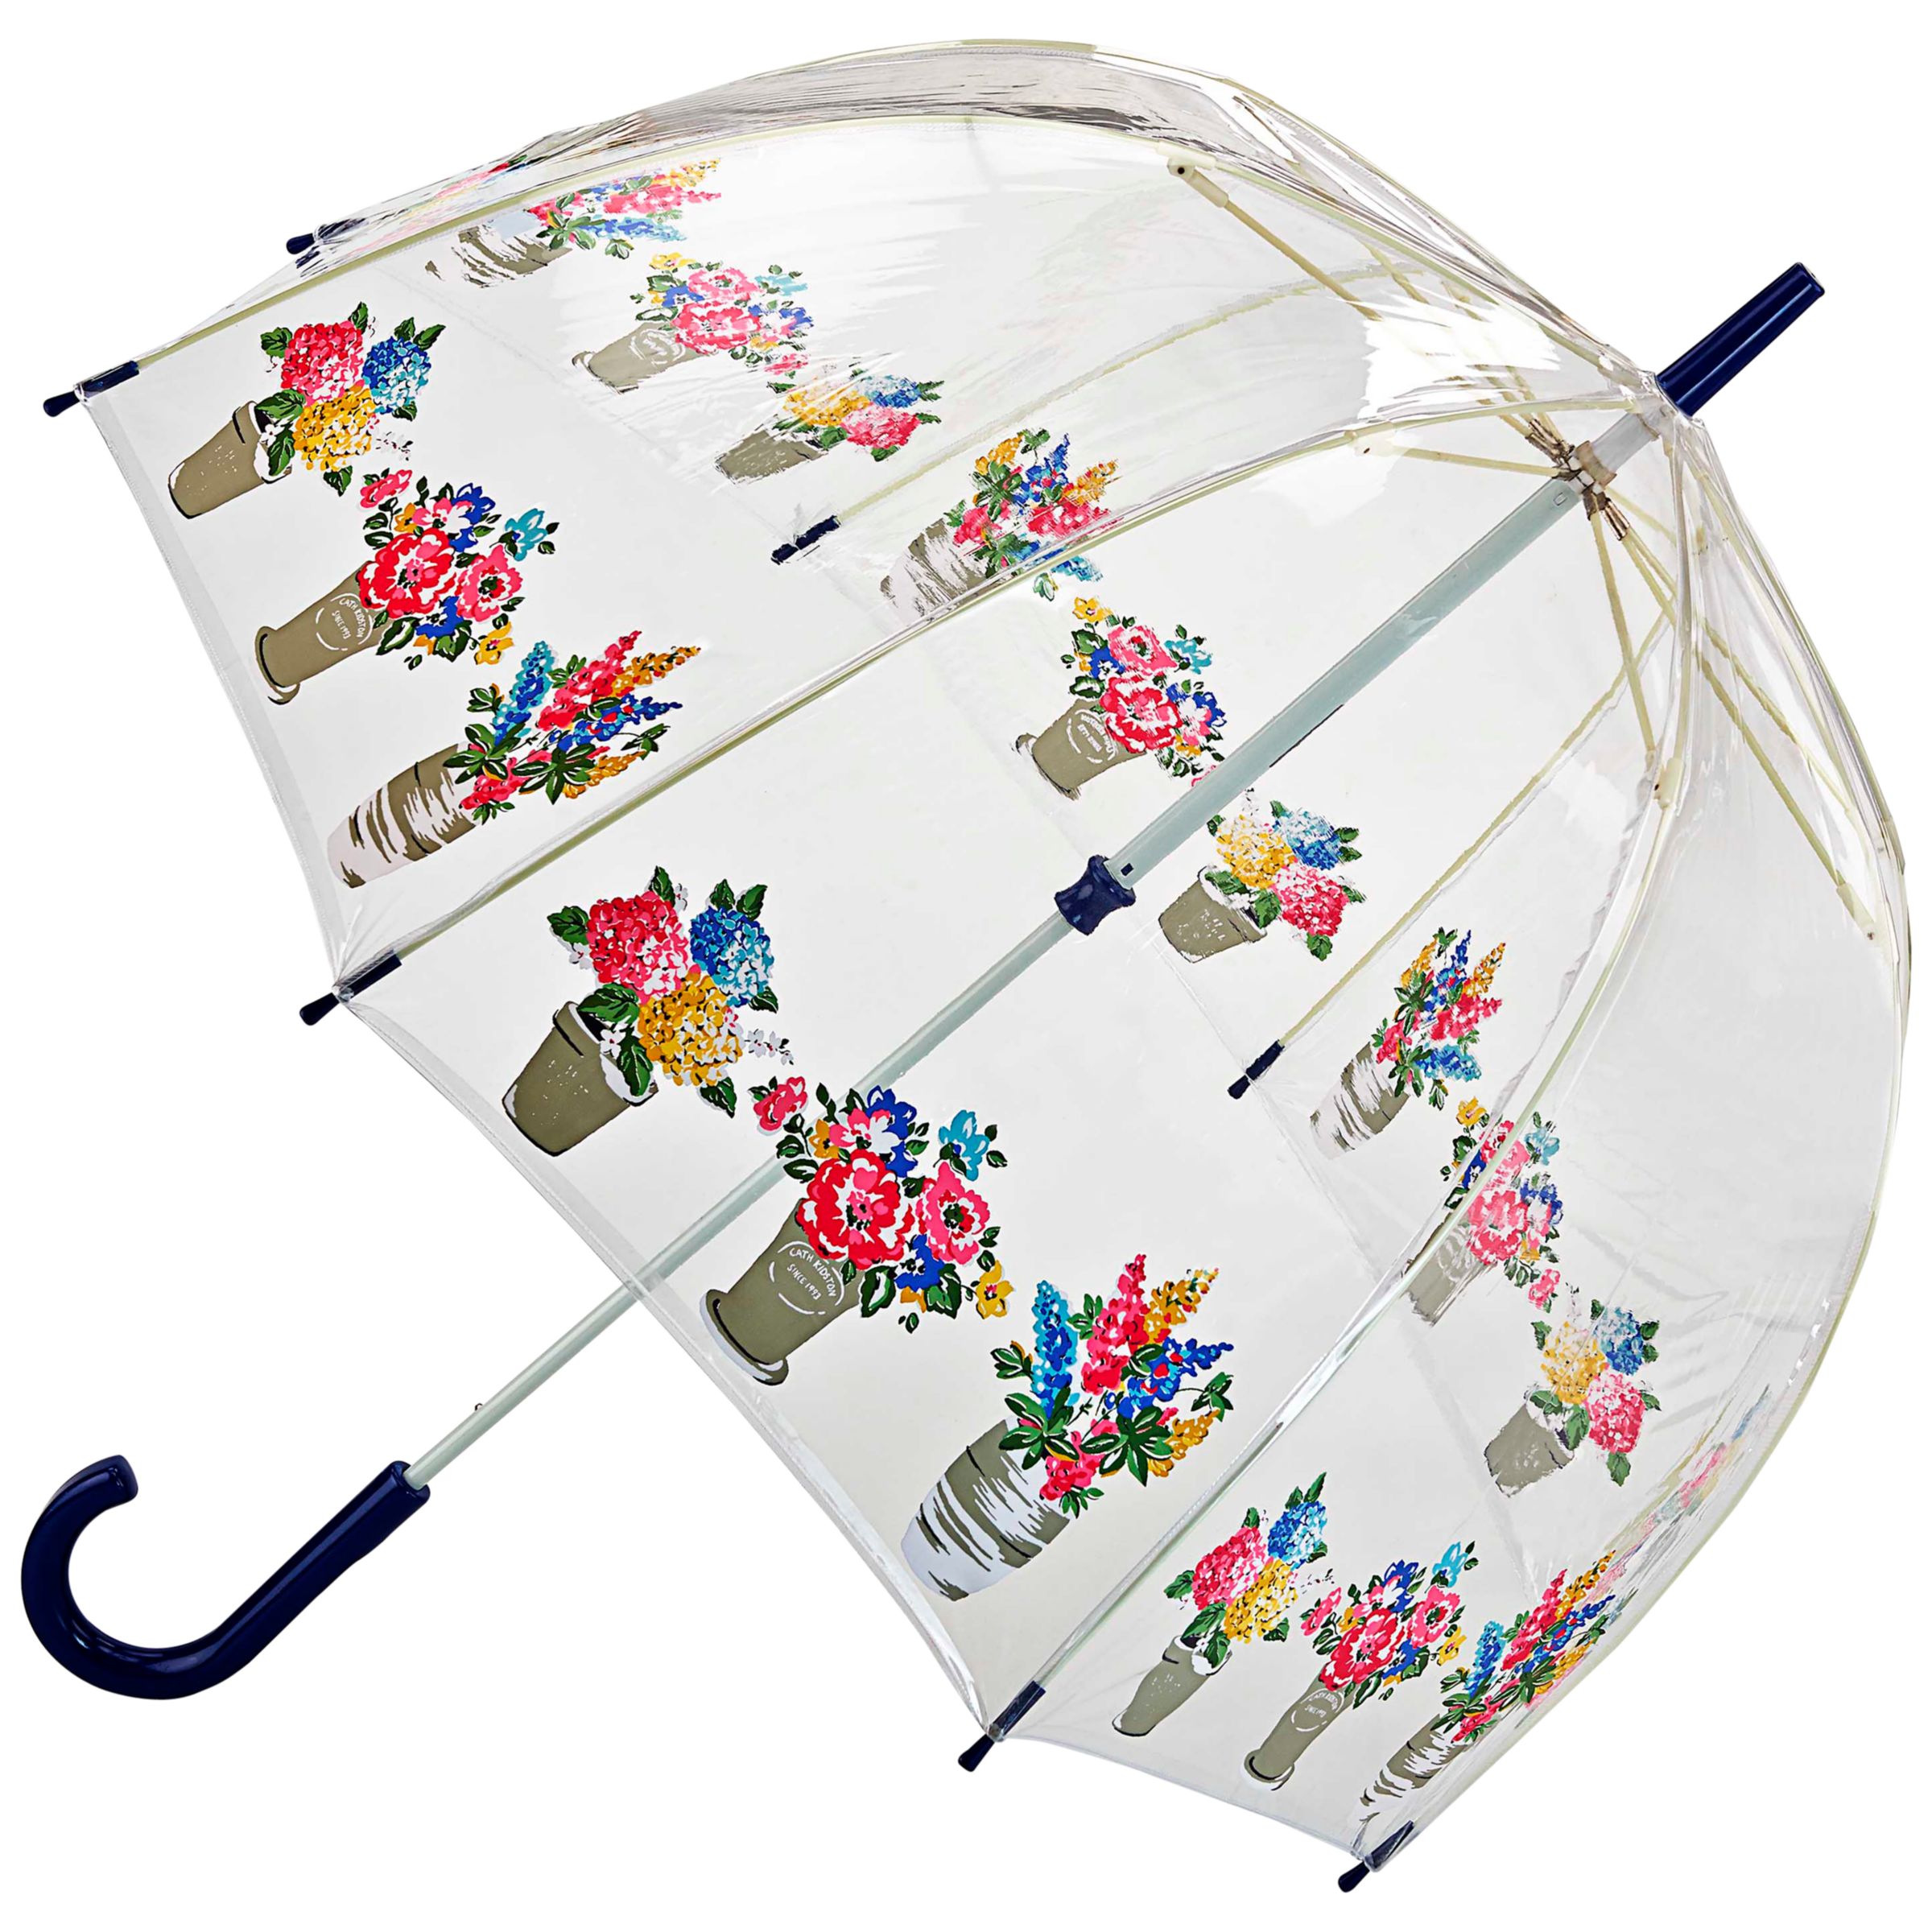 cath kidston childrens umbrella